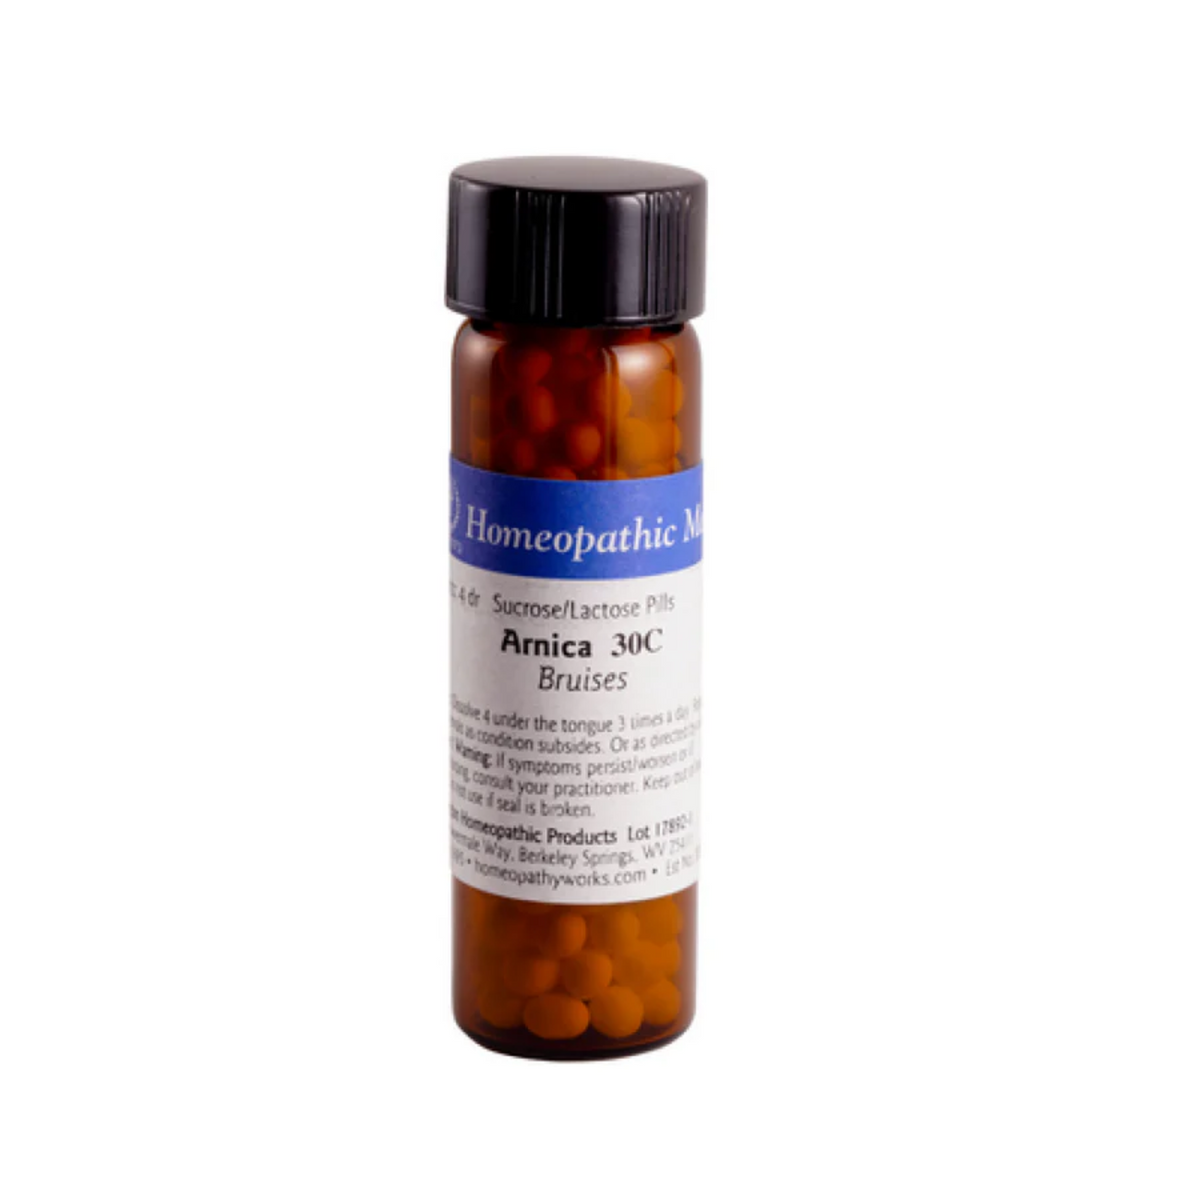 Primary Image of Washington Homeopathic Products Arnica Montana 30c (4 dram)